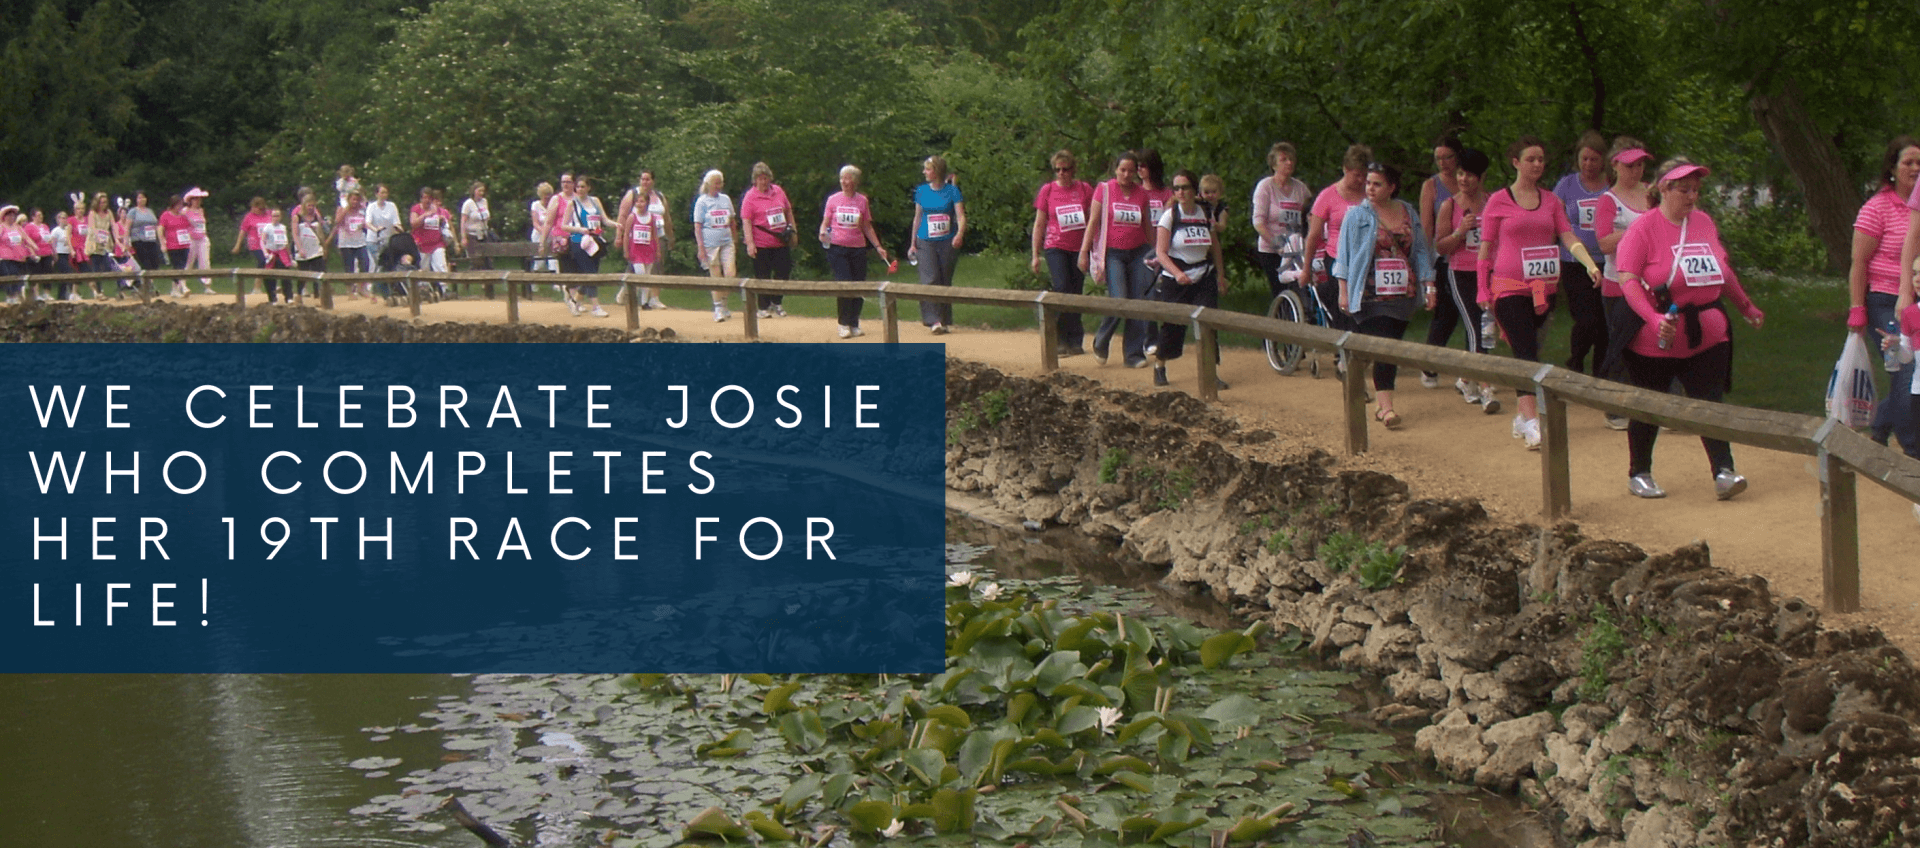 Josie Race for life 1